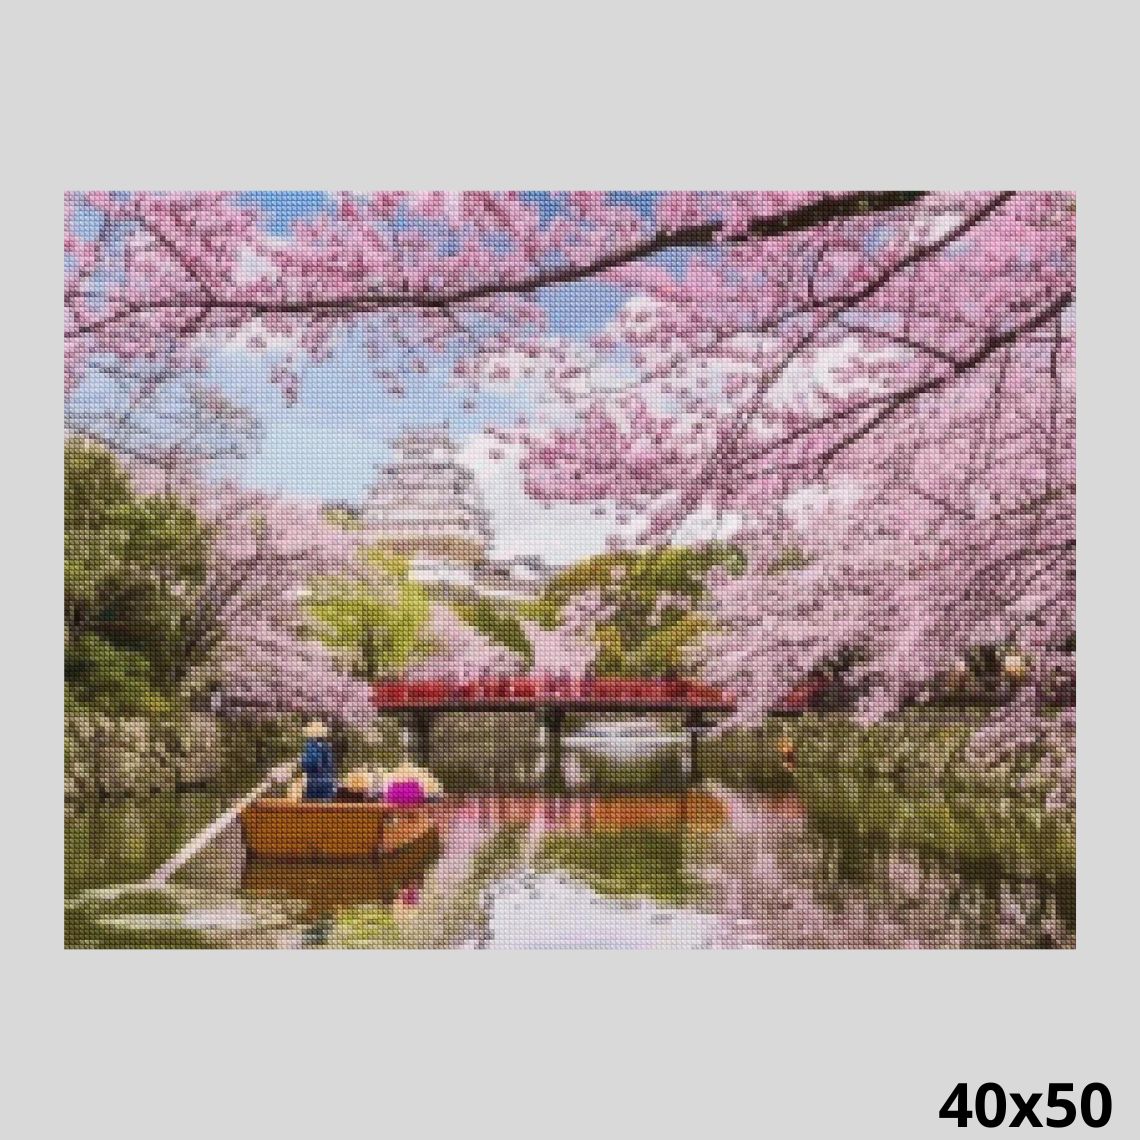 Japanese Garden 40x50 - Diamond Painting